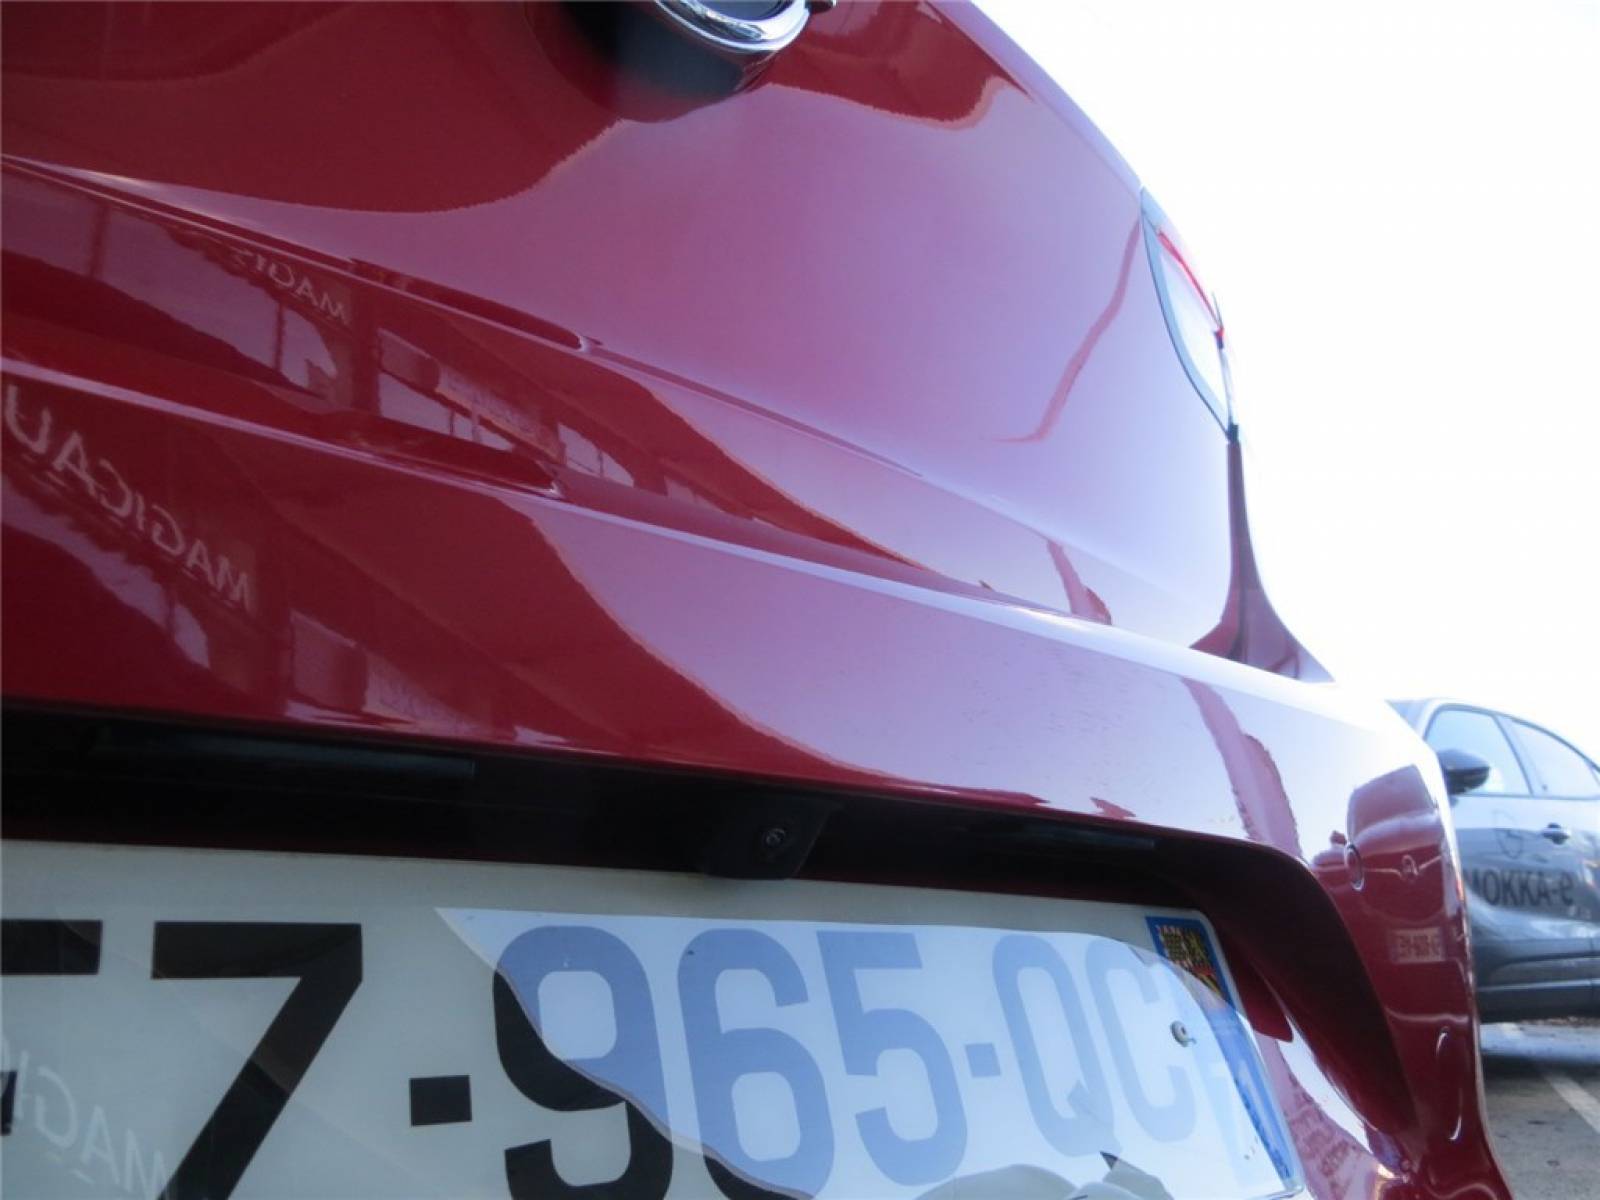 OPEL Corsa 1.2 Turbo 100 ch BVM6 - véhicule d'occasion - Groupe Guillet - Opel Magicauto - Chalon-sur-Saône - 71380 - Saint-Marcel - 9